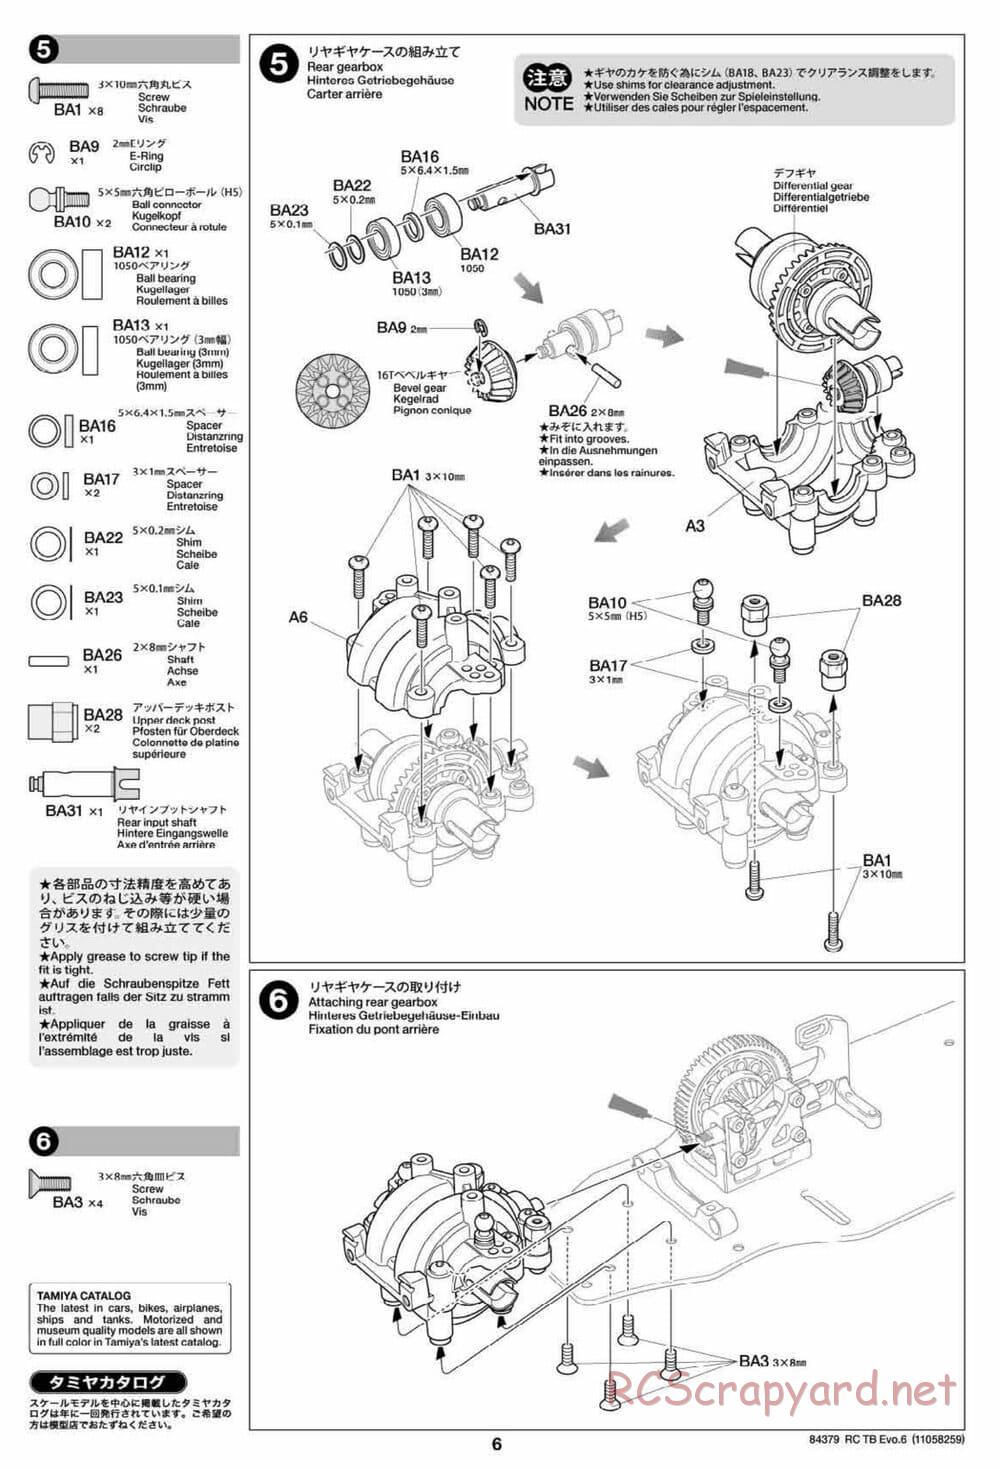 Tamiya - TB Evo.6 Chassis - Manual - Page 6